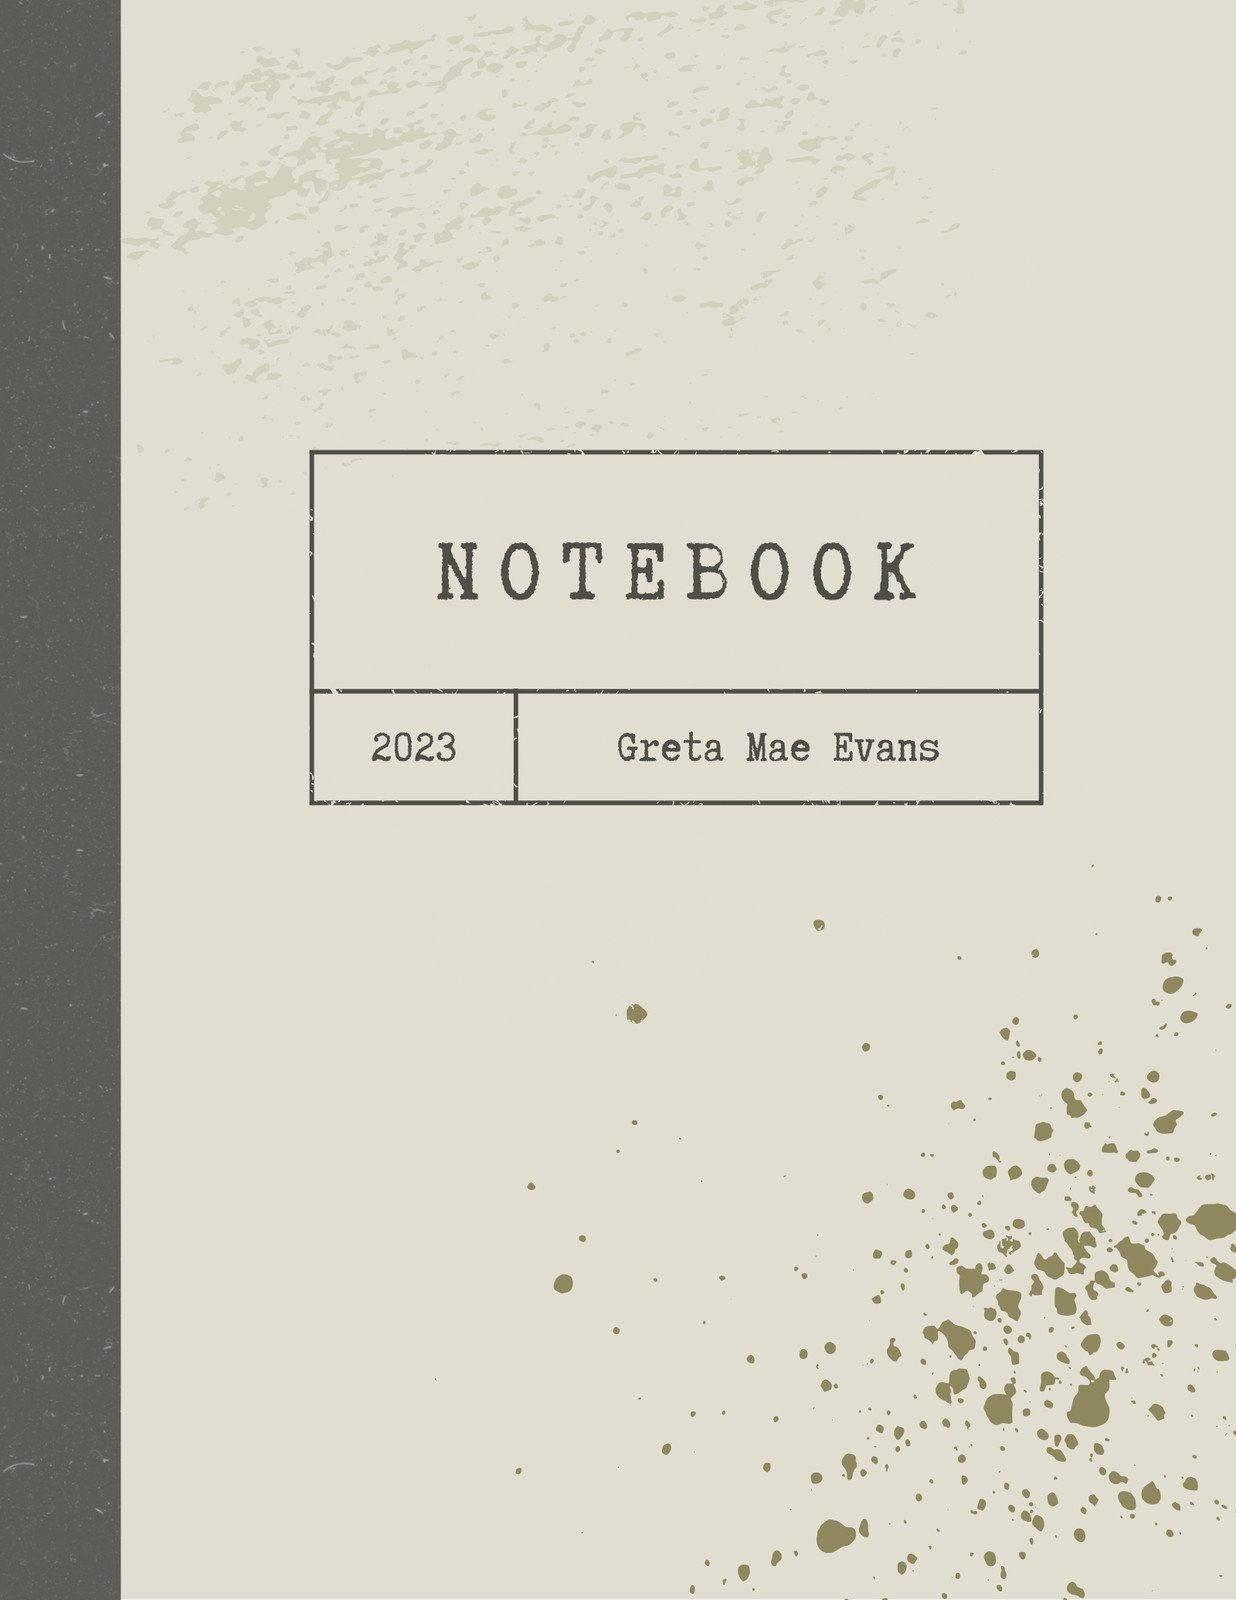 Customize 1,878+ Notebooks Templates Online - Canva